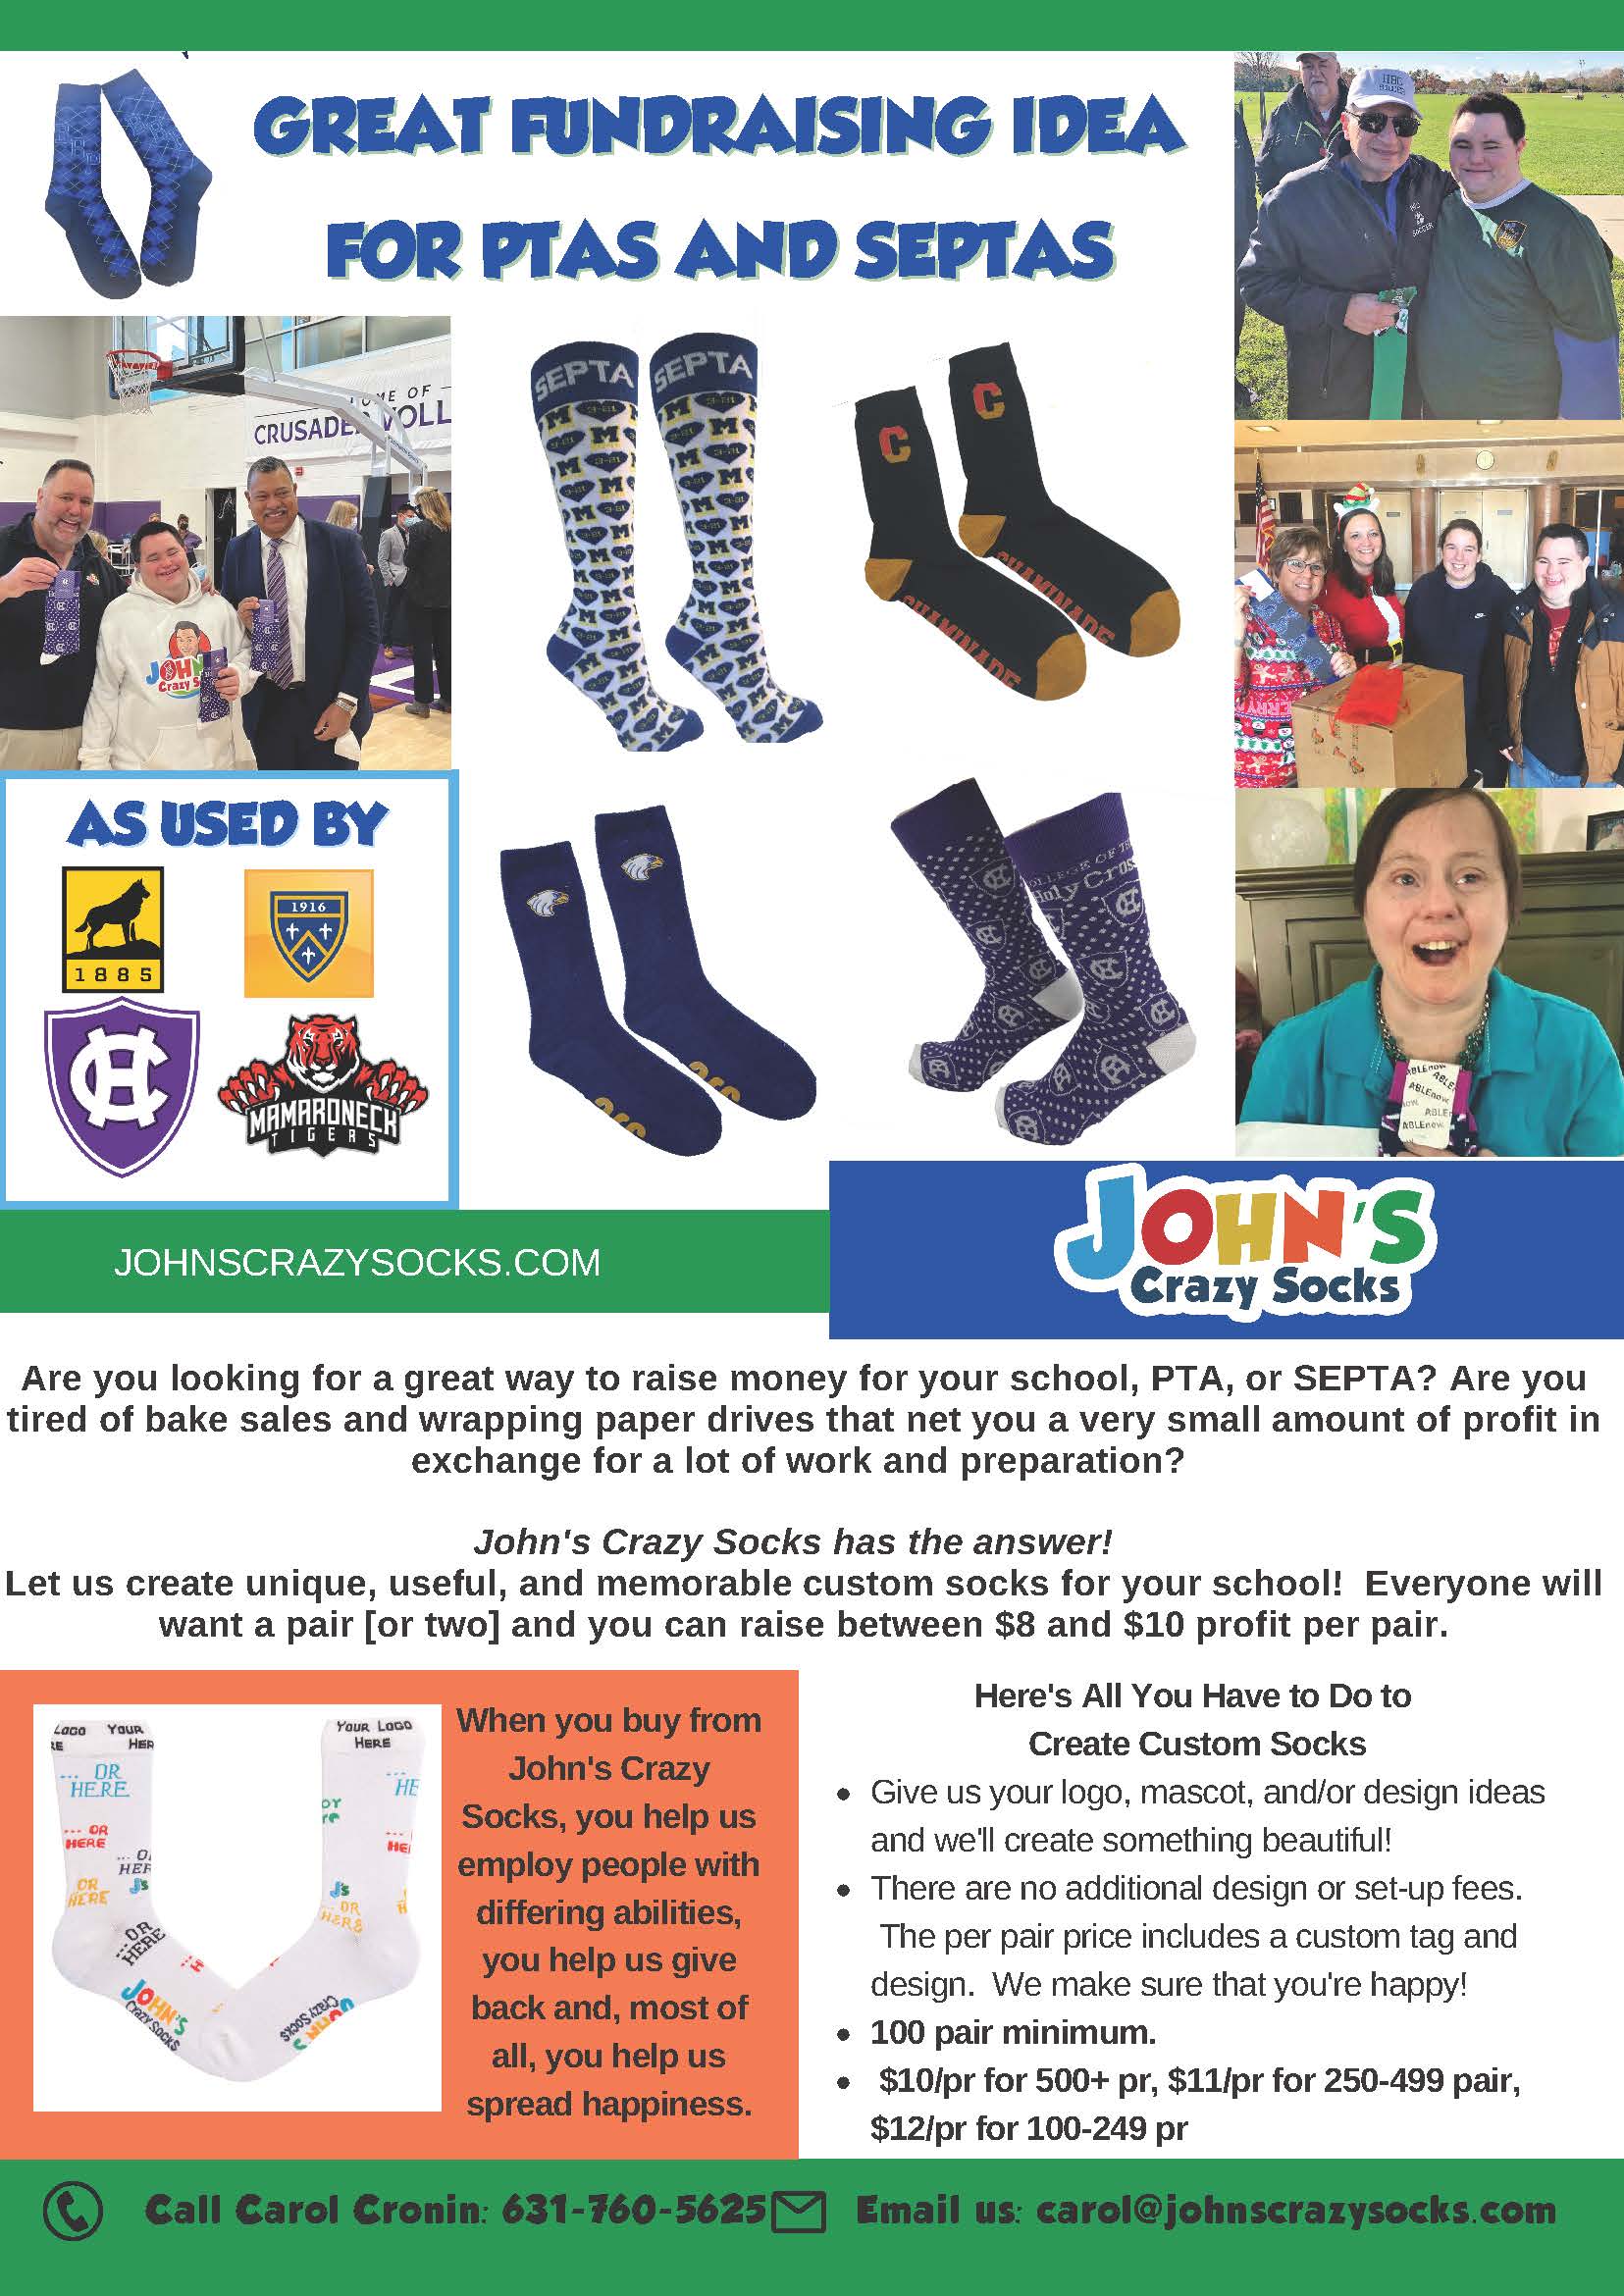 Let John’s Crazy Socks Help You Raise Money for Your PTA or SEPTA